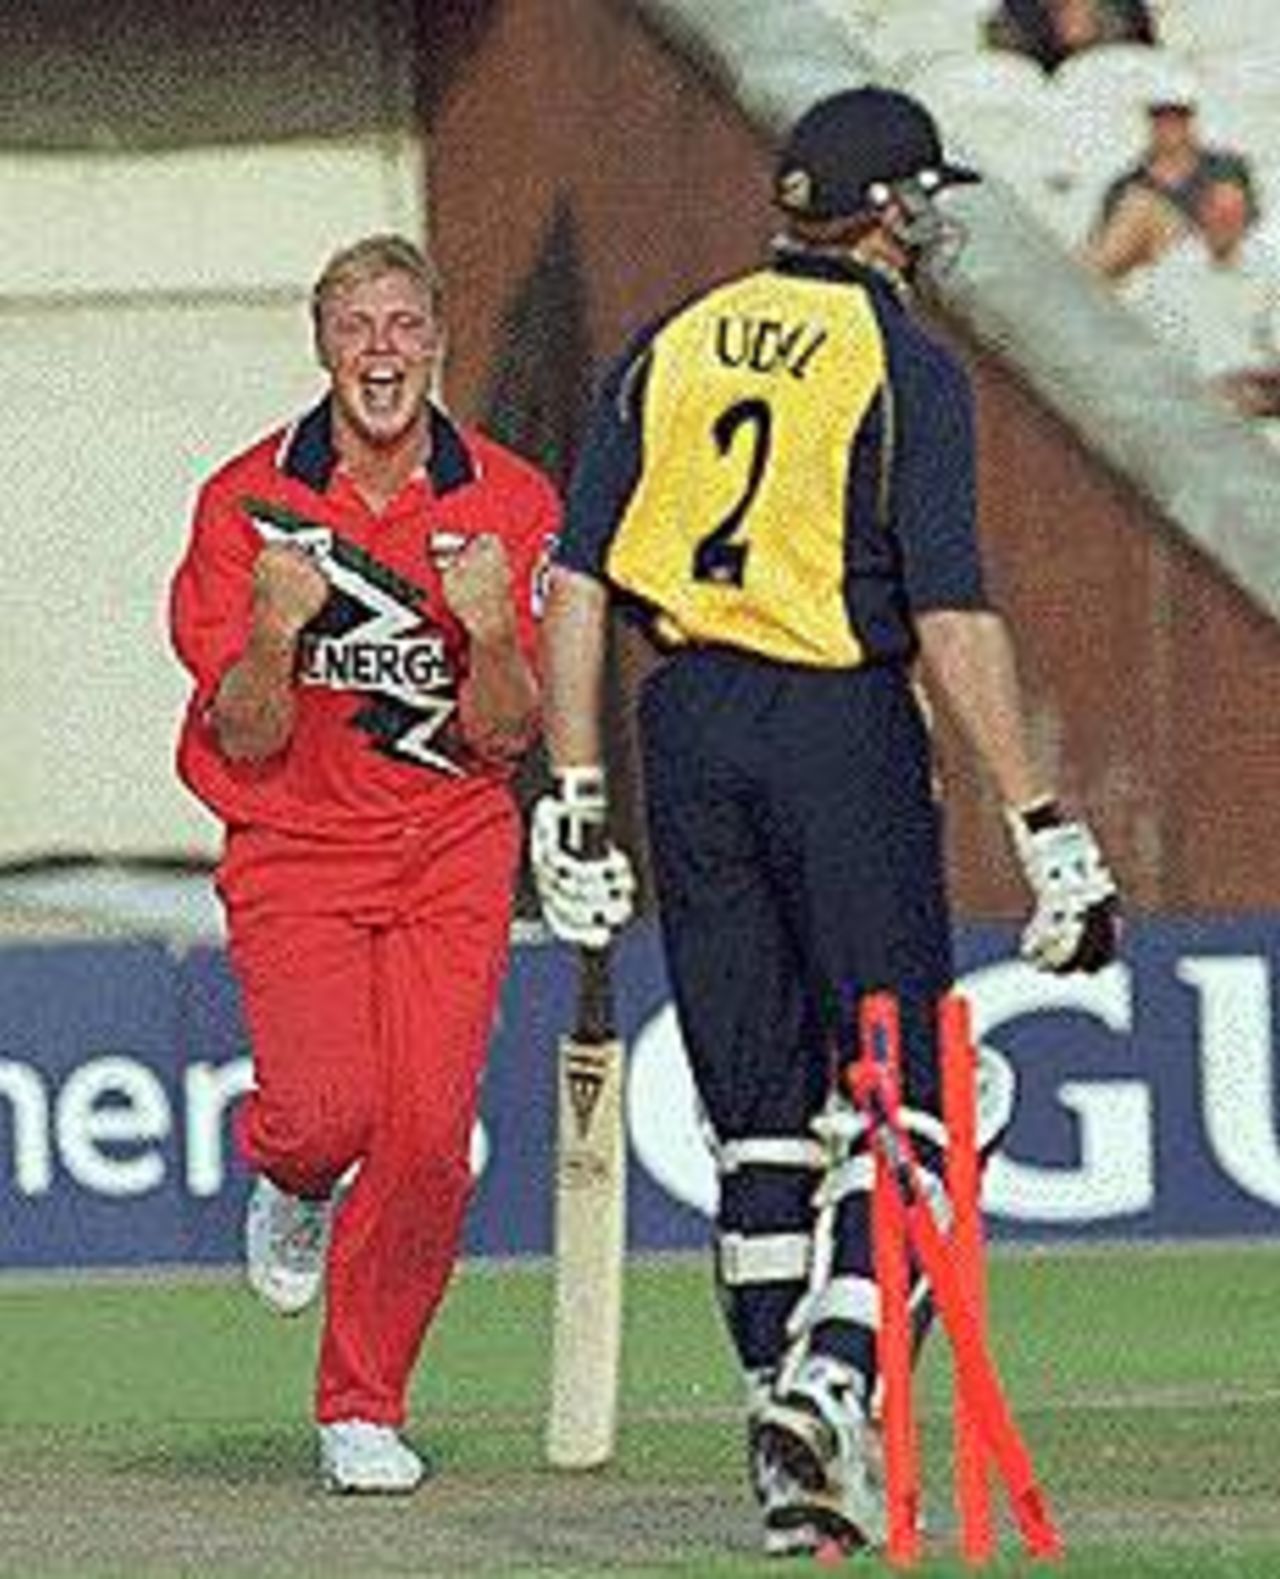 Andrew Flintoff celebrating the wicket of Udal, National League, Lancashire v Hampshire, 6 September 1999